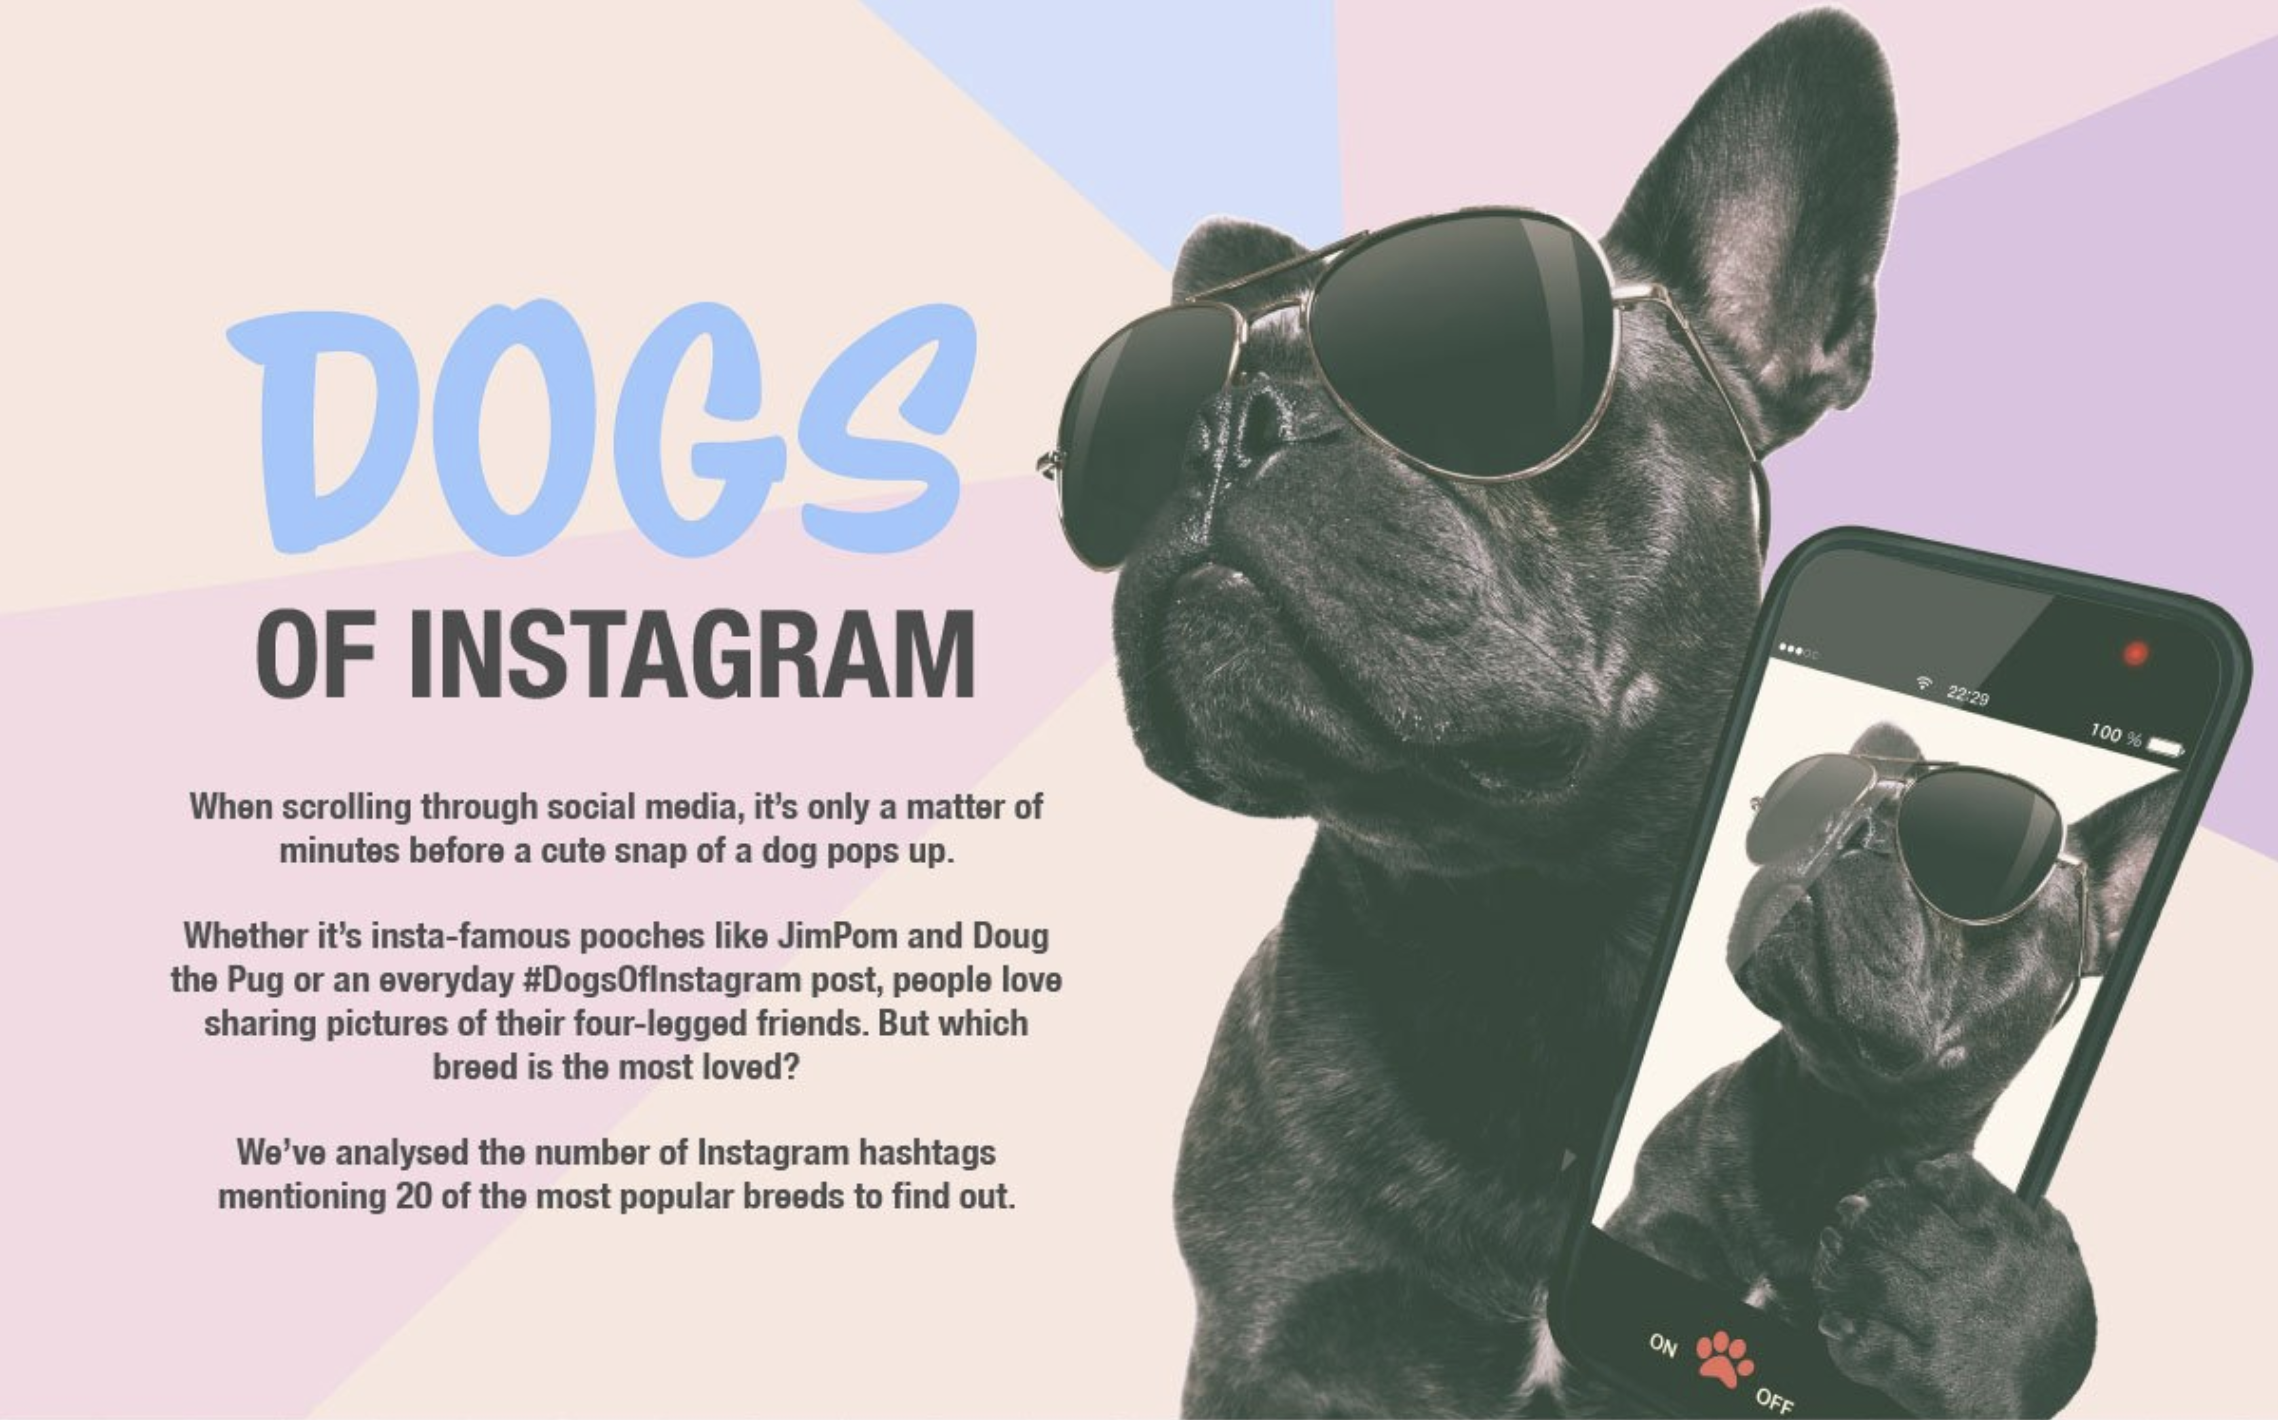 MyVoucherCodes' Dogs of Instagram campaign